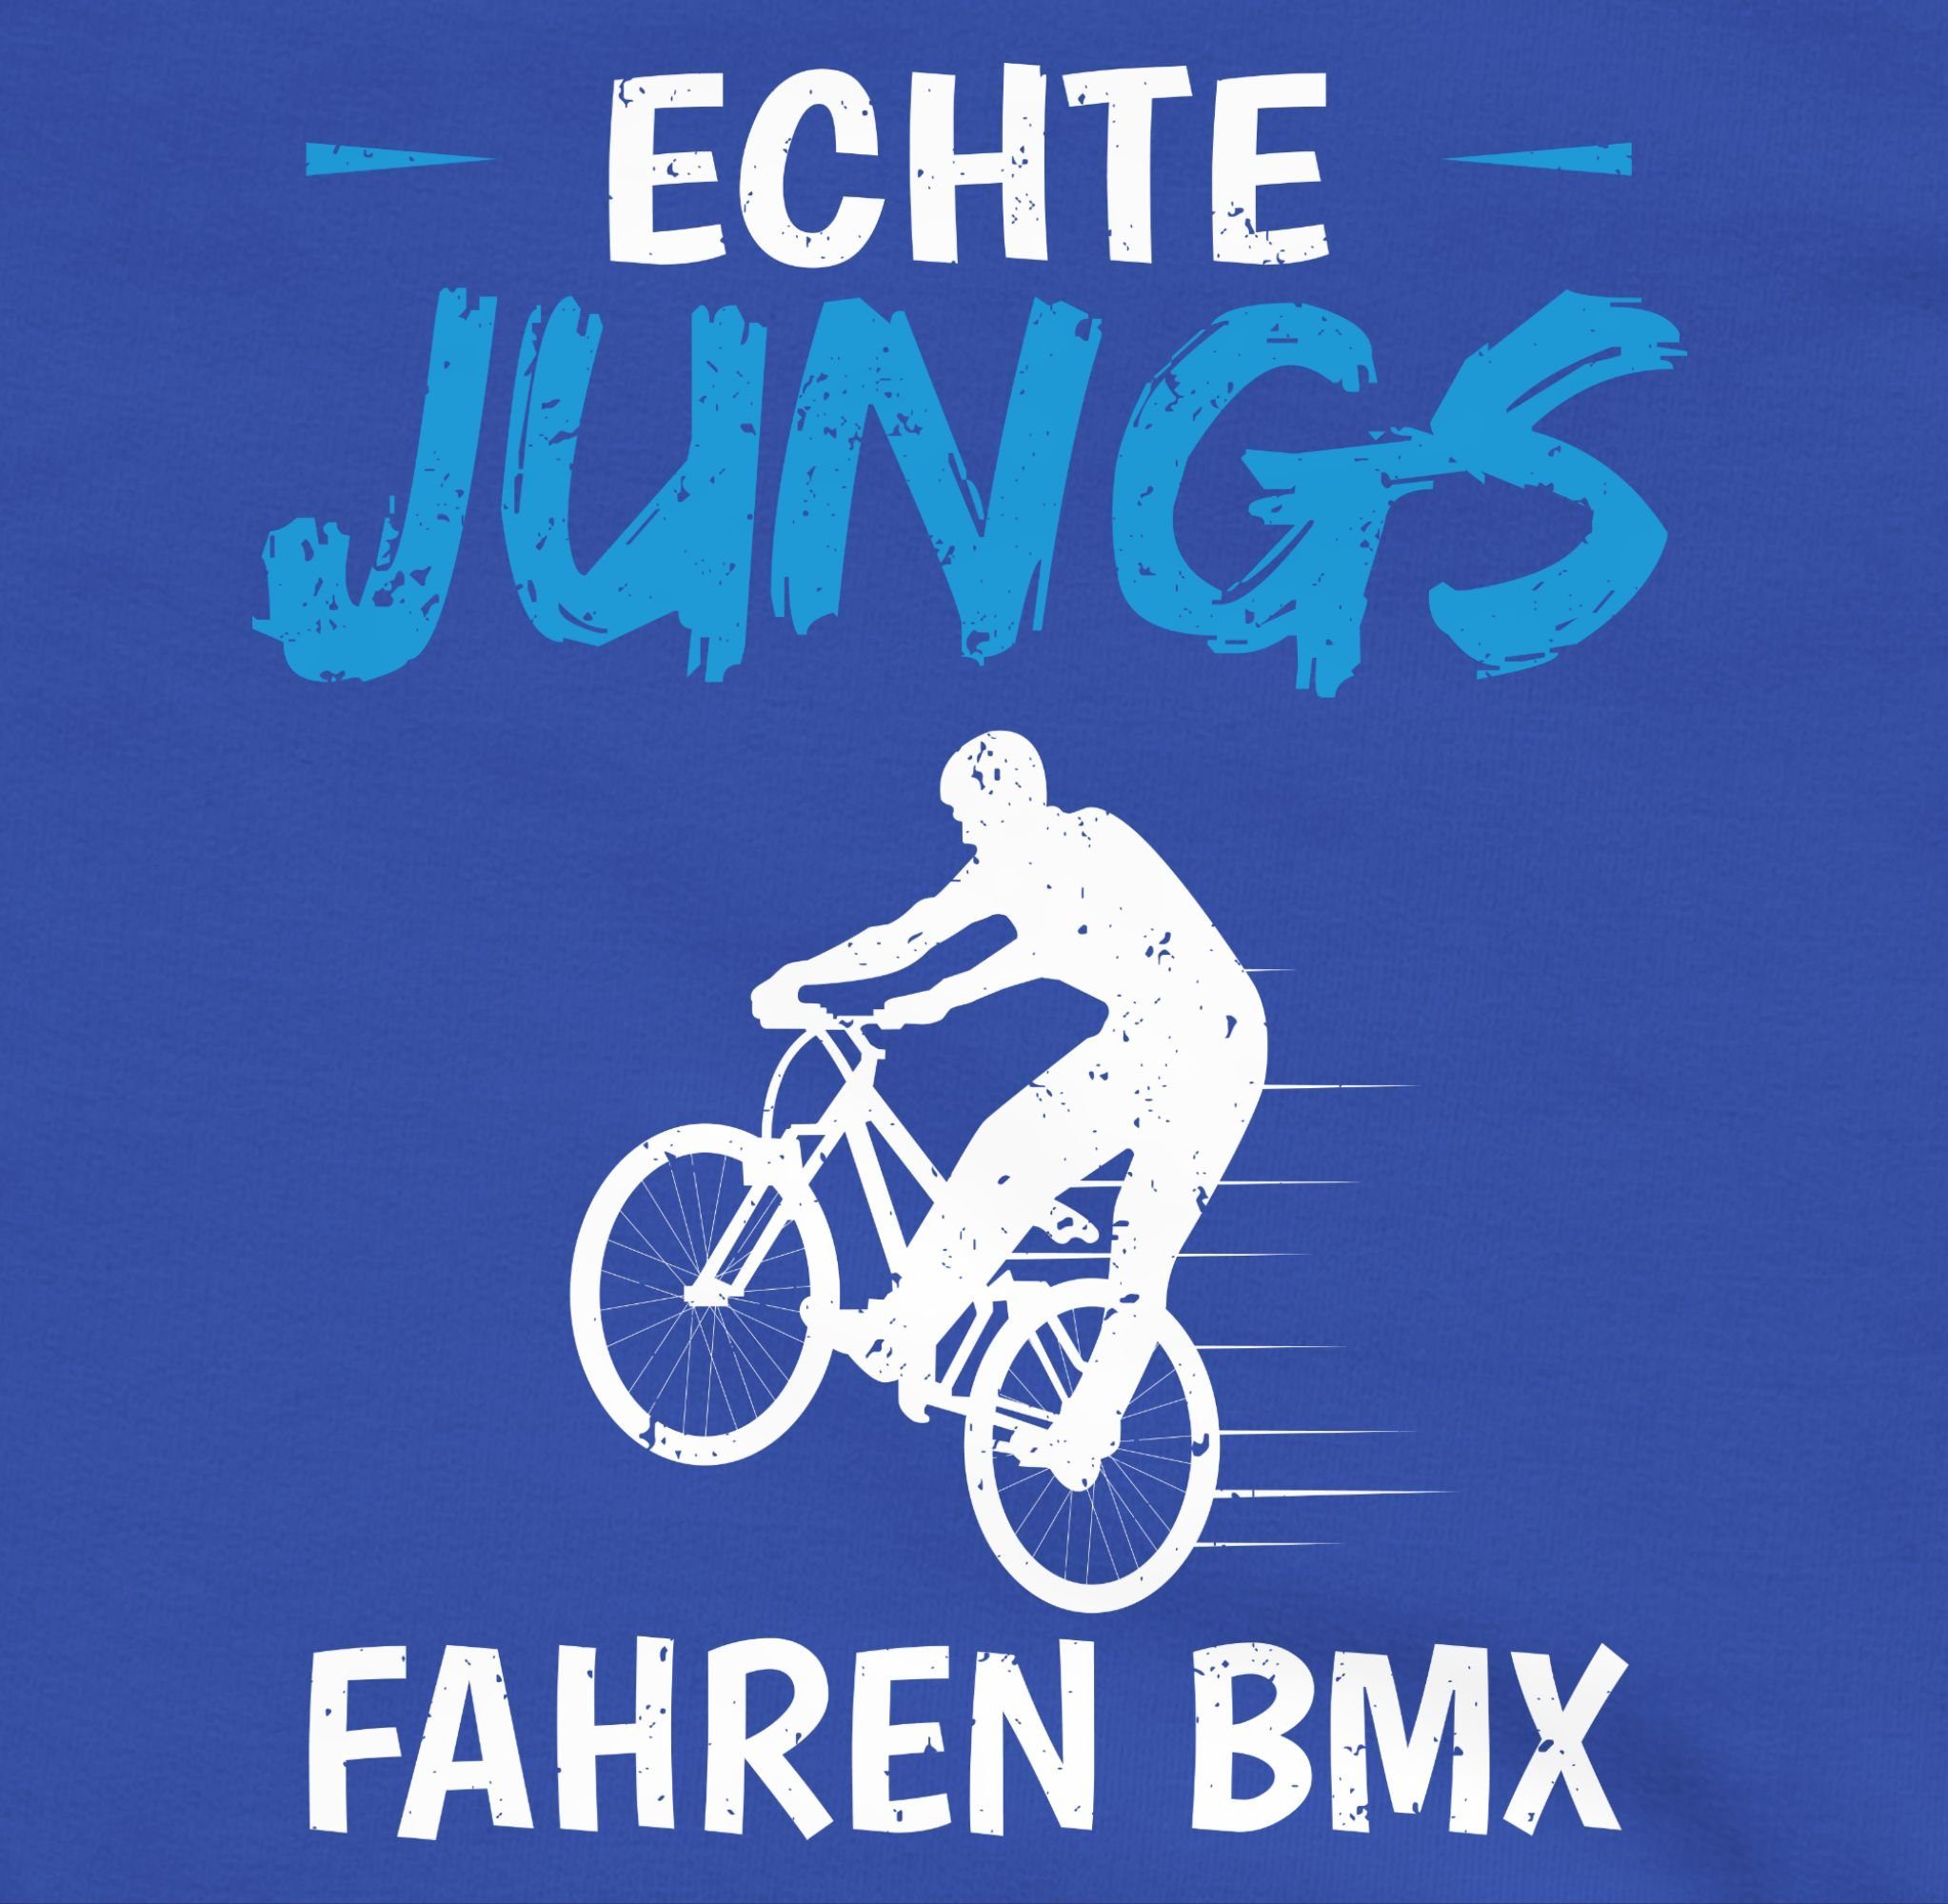 Shirtracer Sweatshirt Echte Jungs fahren Royalblau BMX Kleidung Sport Kinder 2